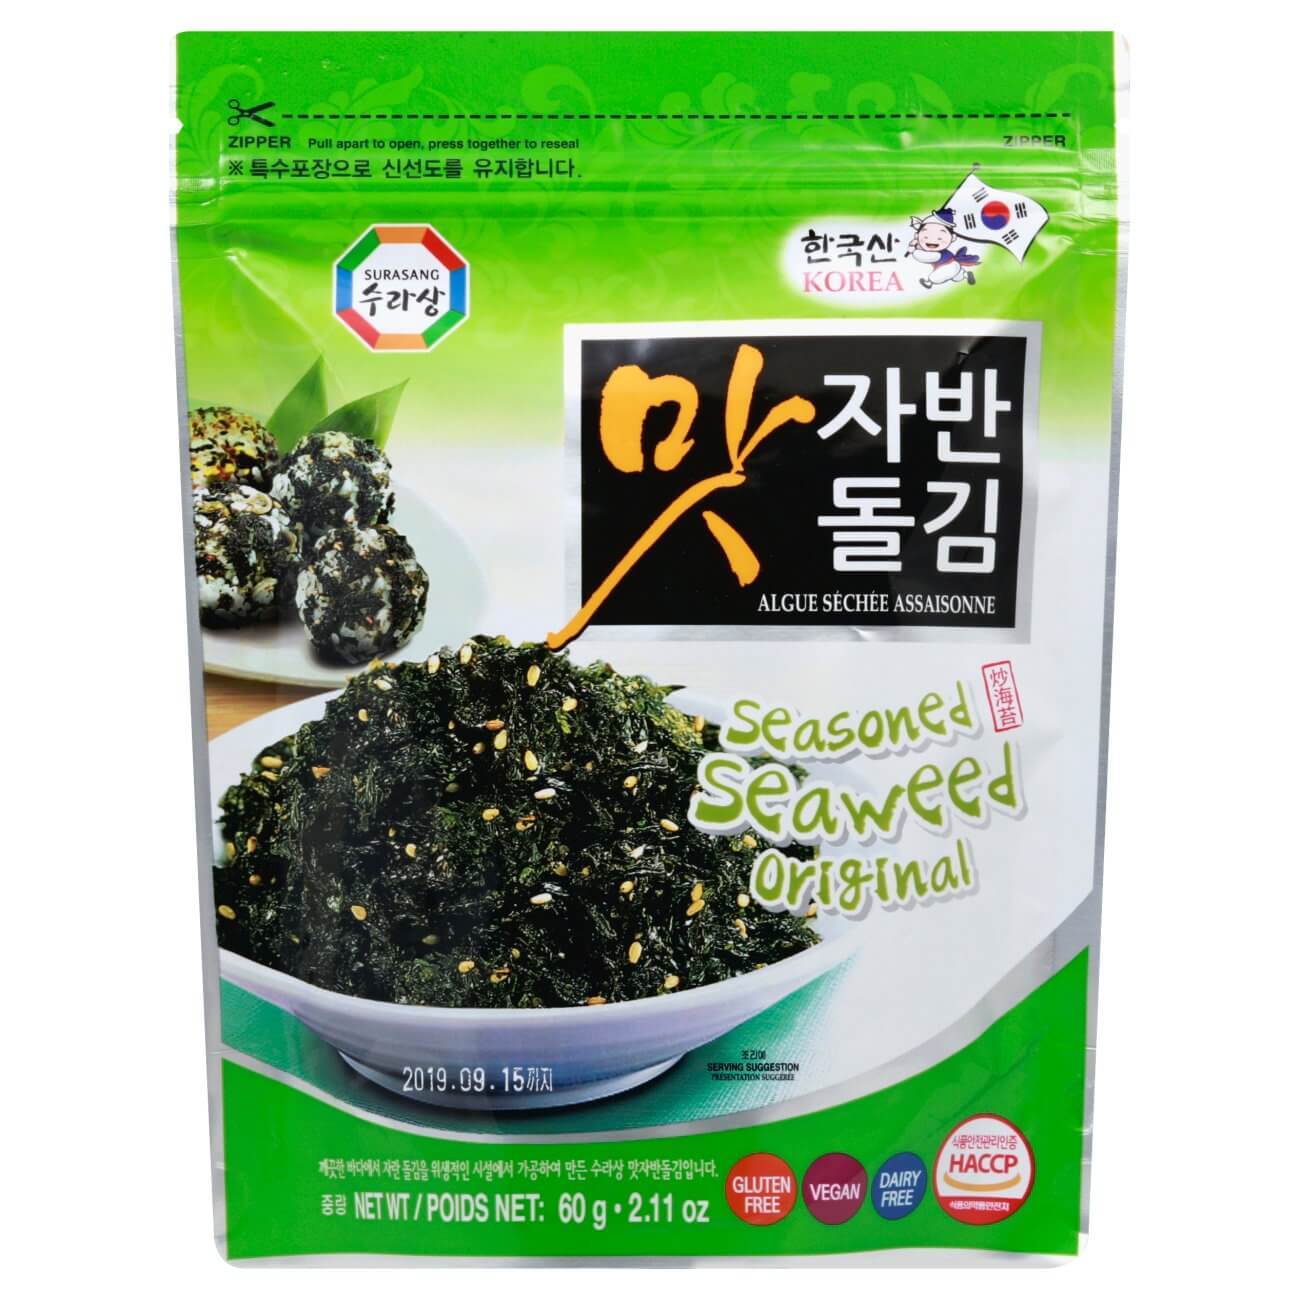 Surasang Seasoned Seaweed (sabor original) - 60g/2.11oz